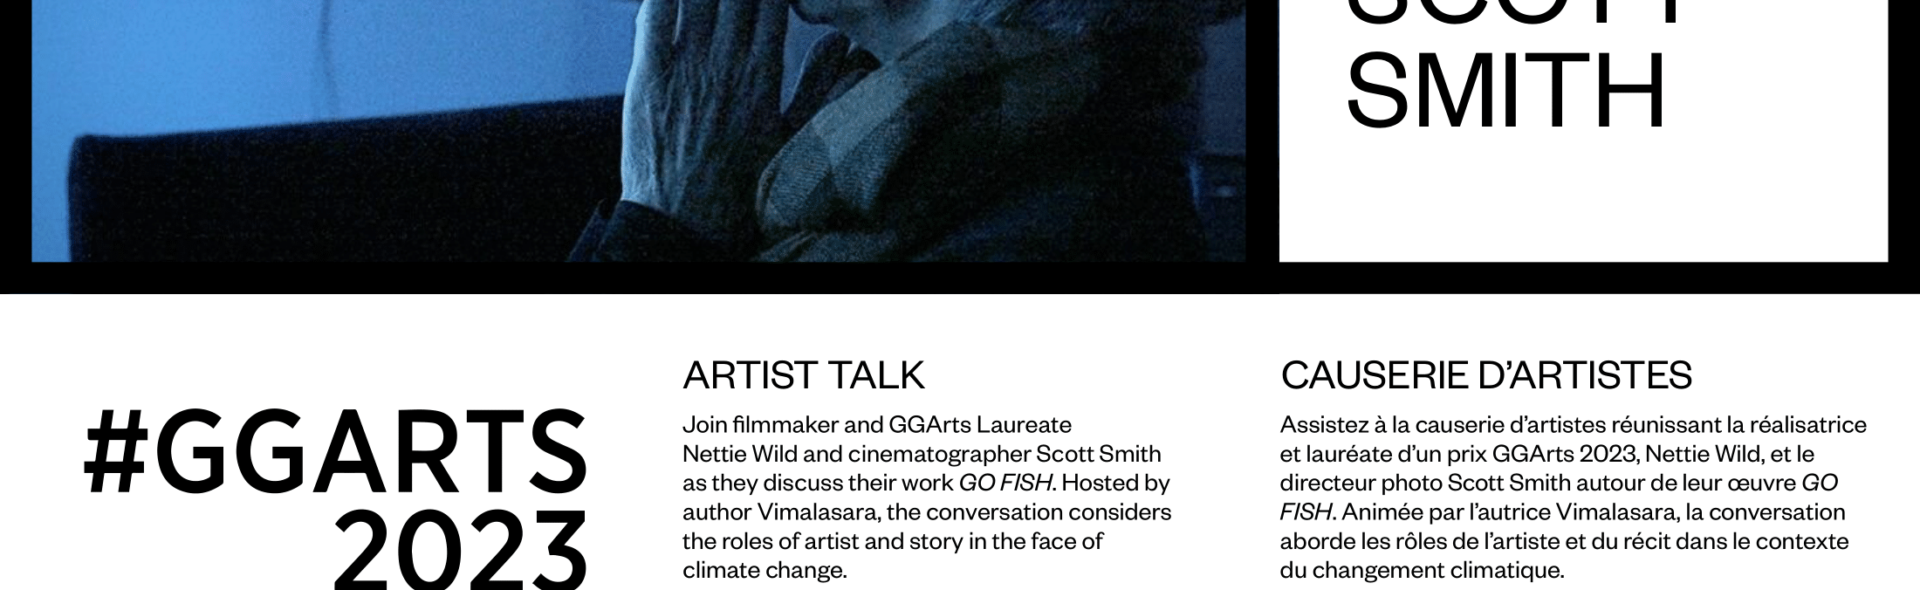 Artist Talk: Scott Smith + Nettie Wild – GO FISH, hosted by Vimalasara.